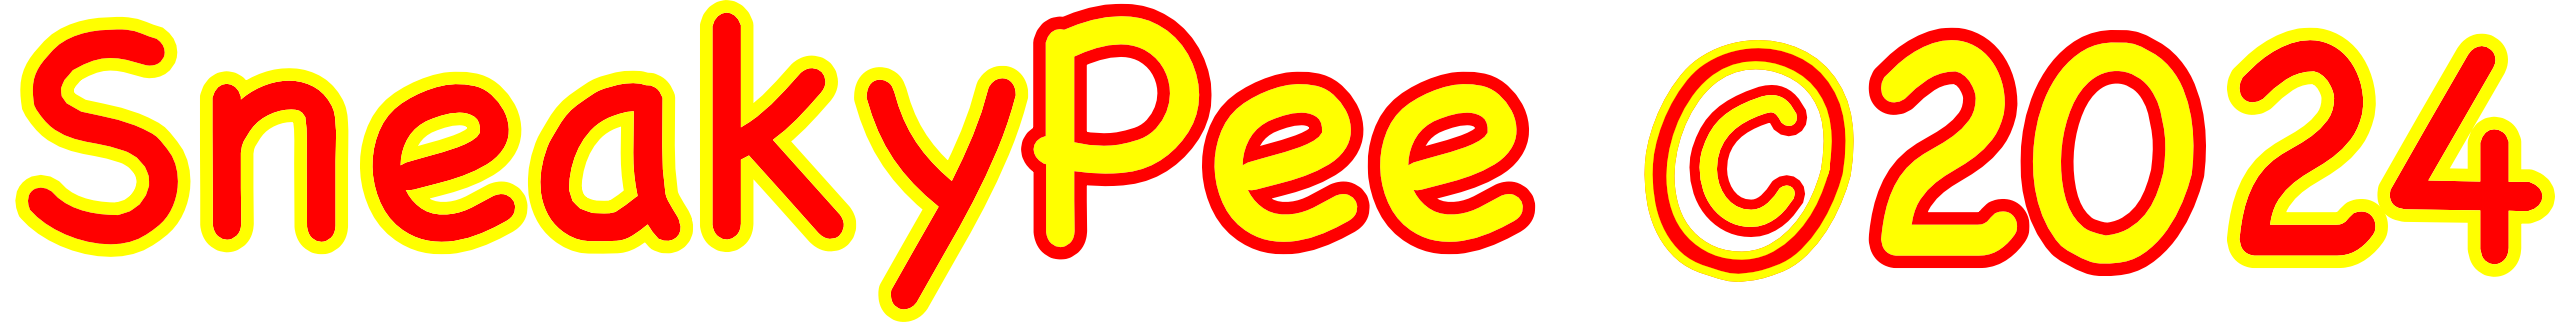 Sneaky Logo